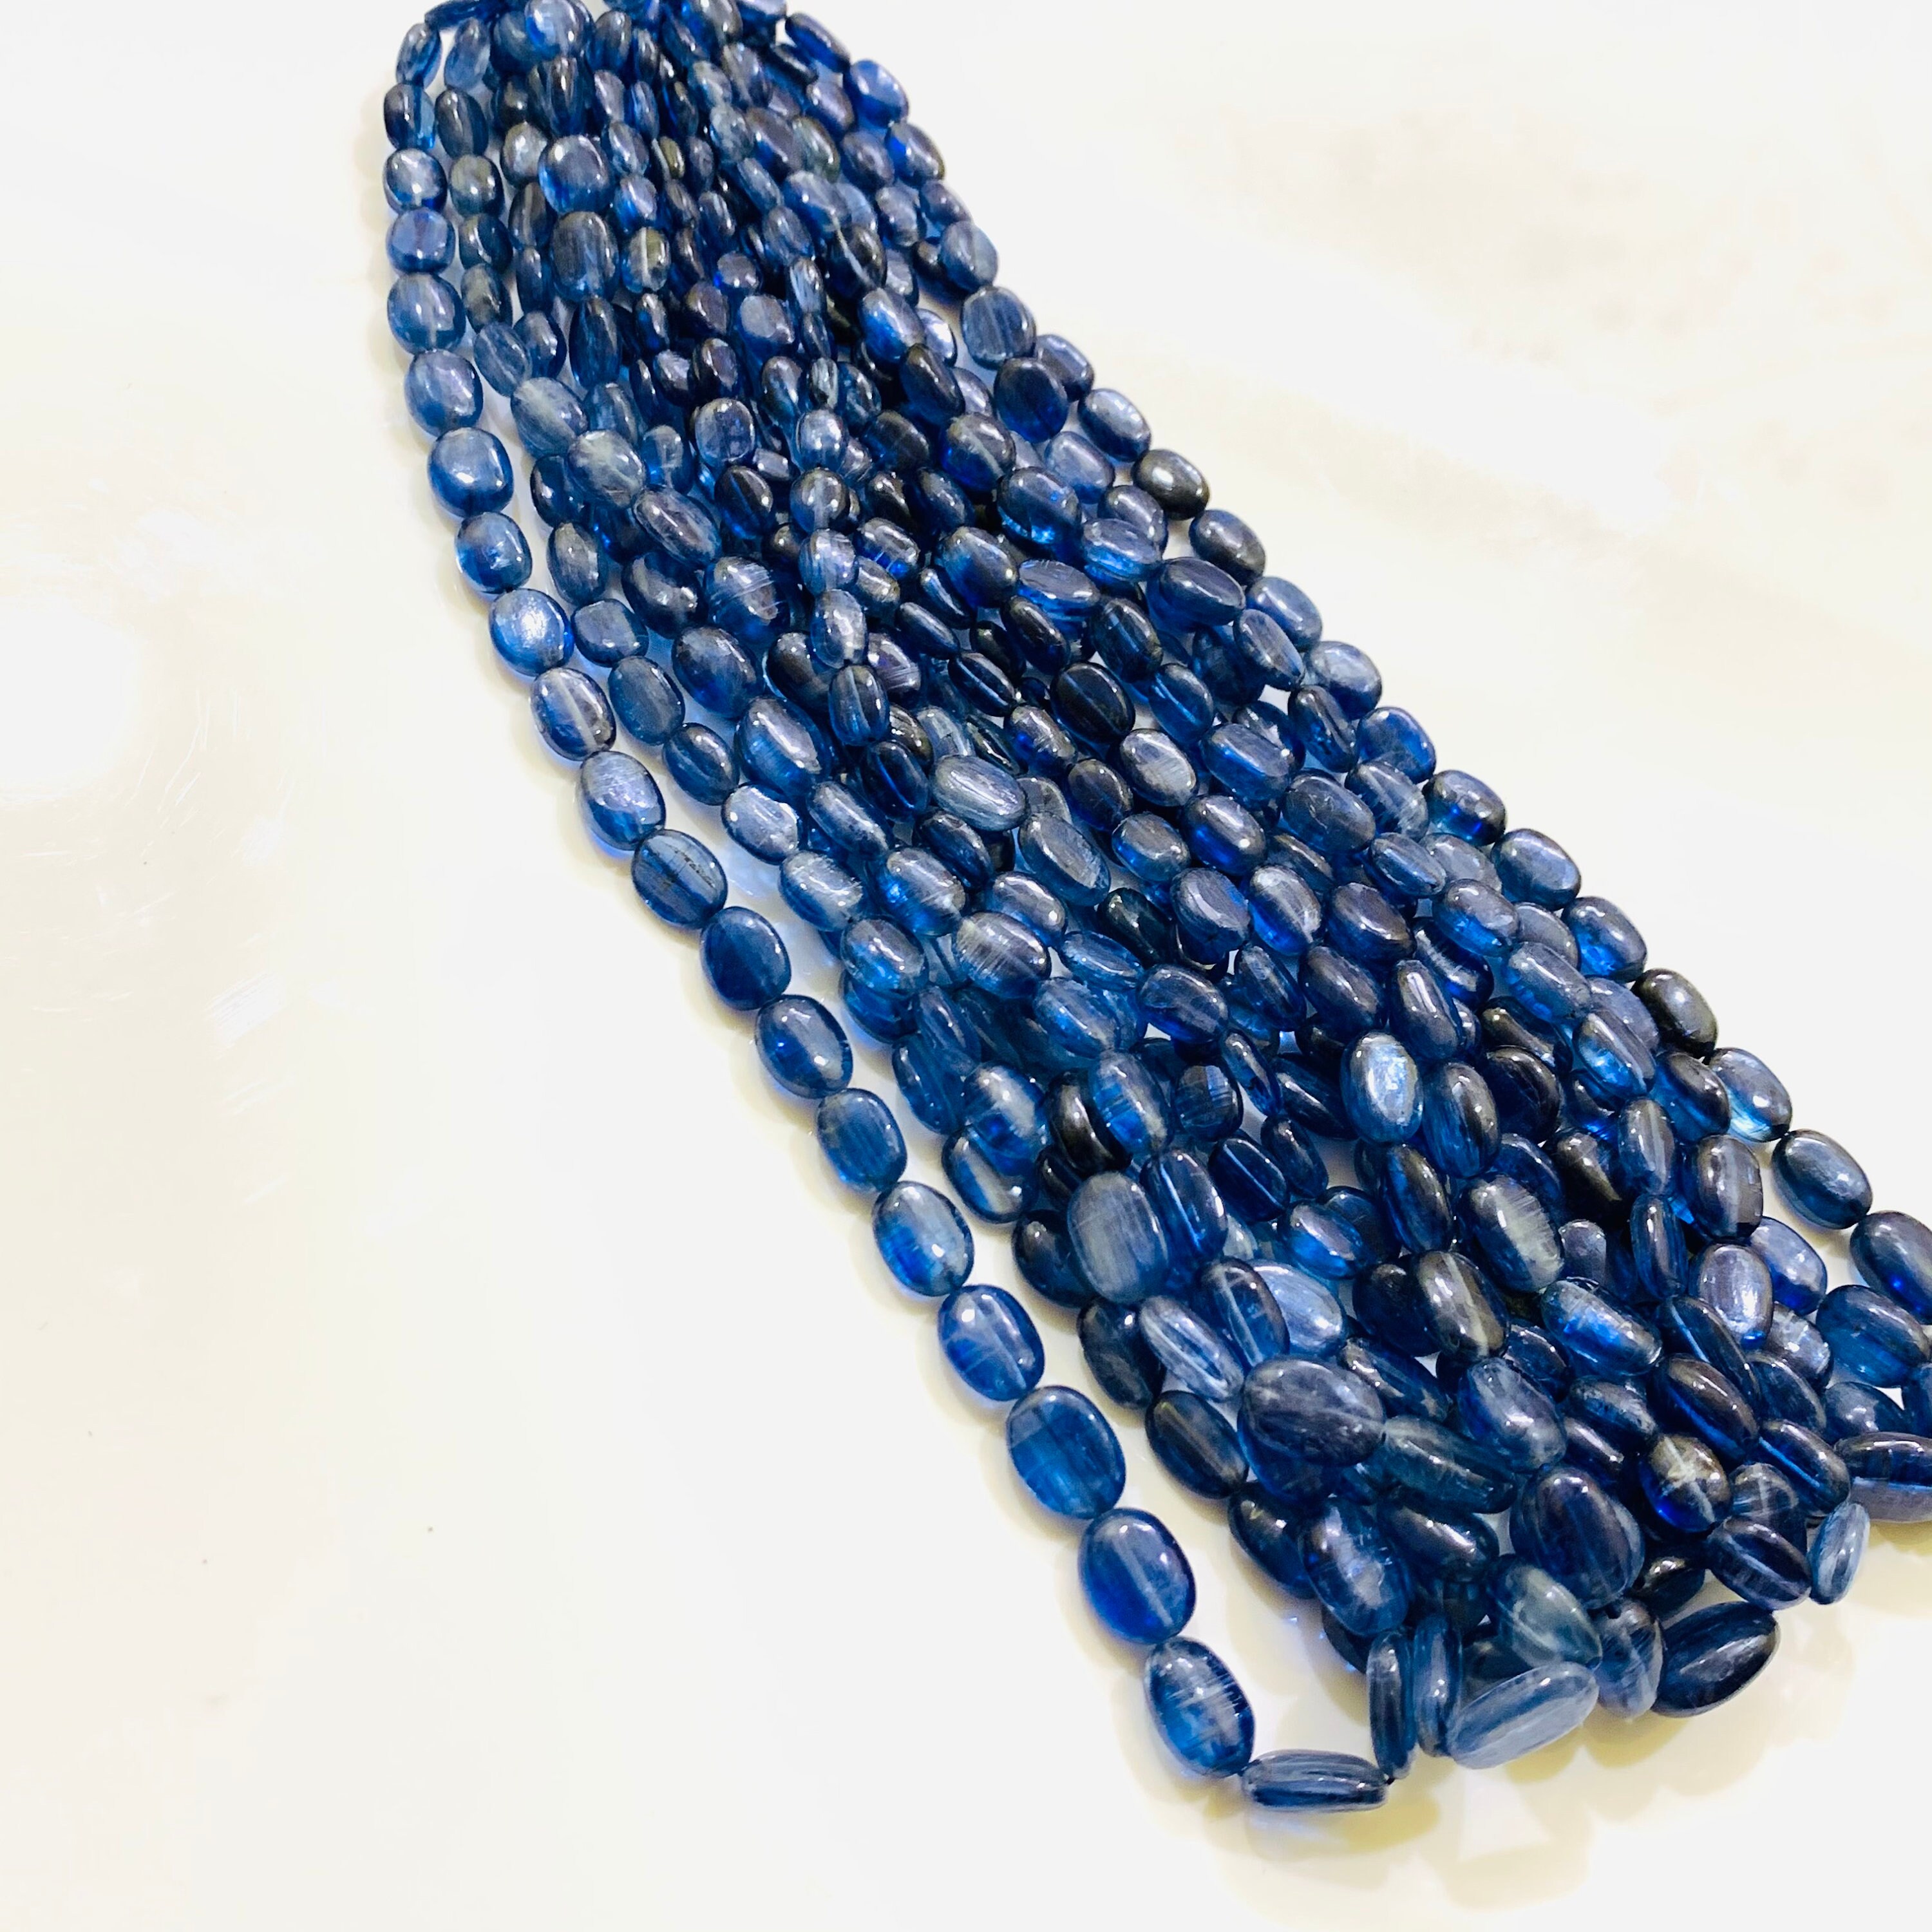 Small Strand of Stunning Kyanite Stick Gemstone Beads 10-40 mm 7.5 cm 2-6